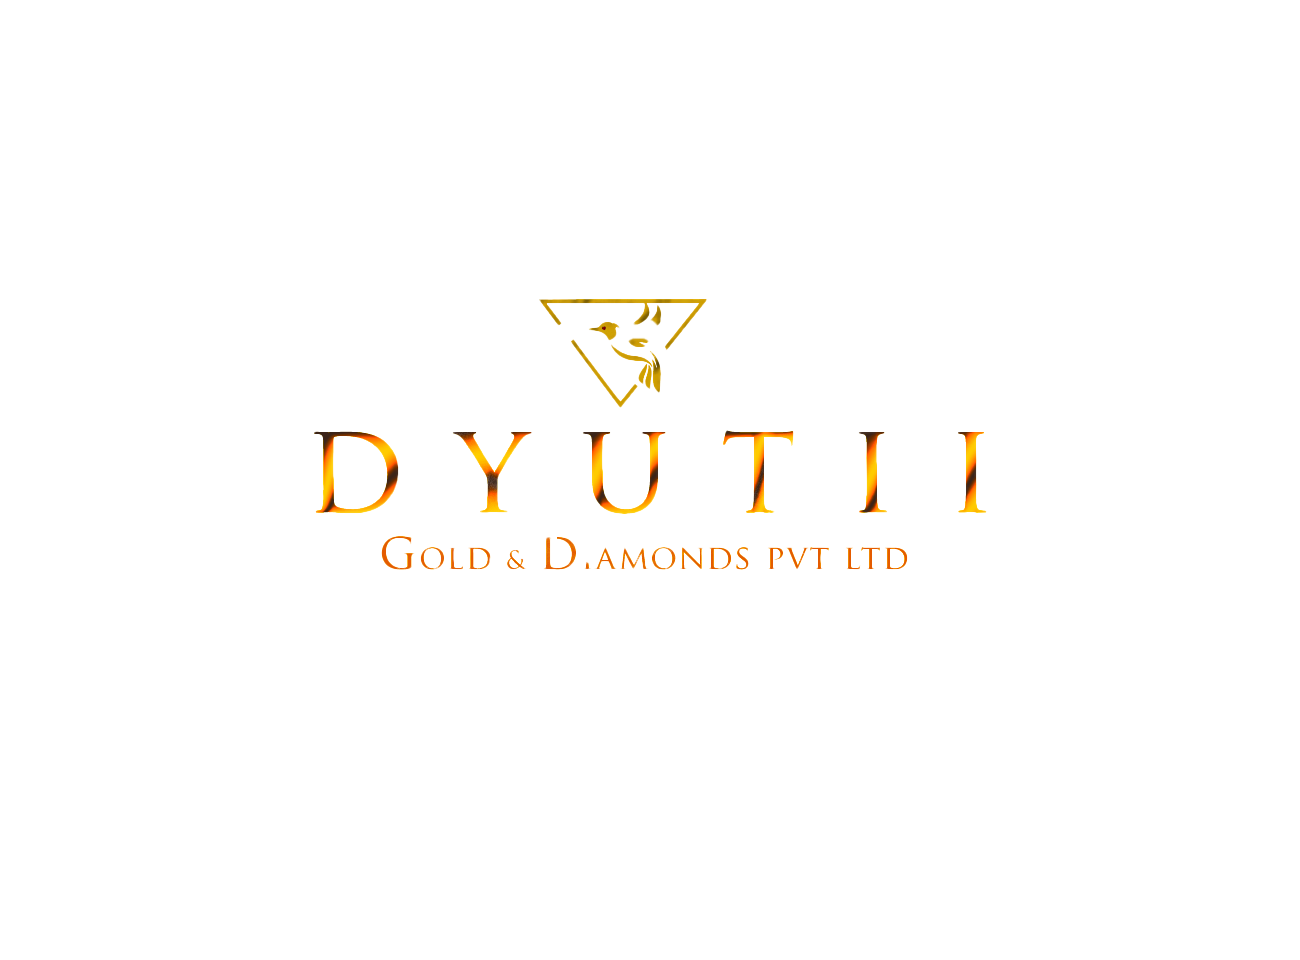  DYUTII Gold & Diamonds Pvt Ltd -  Prabodh Pt  - Director 